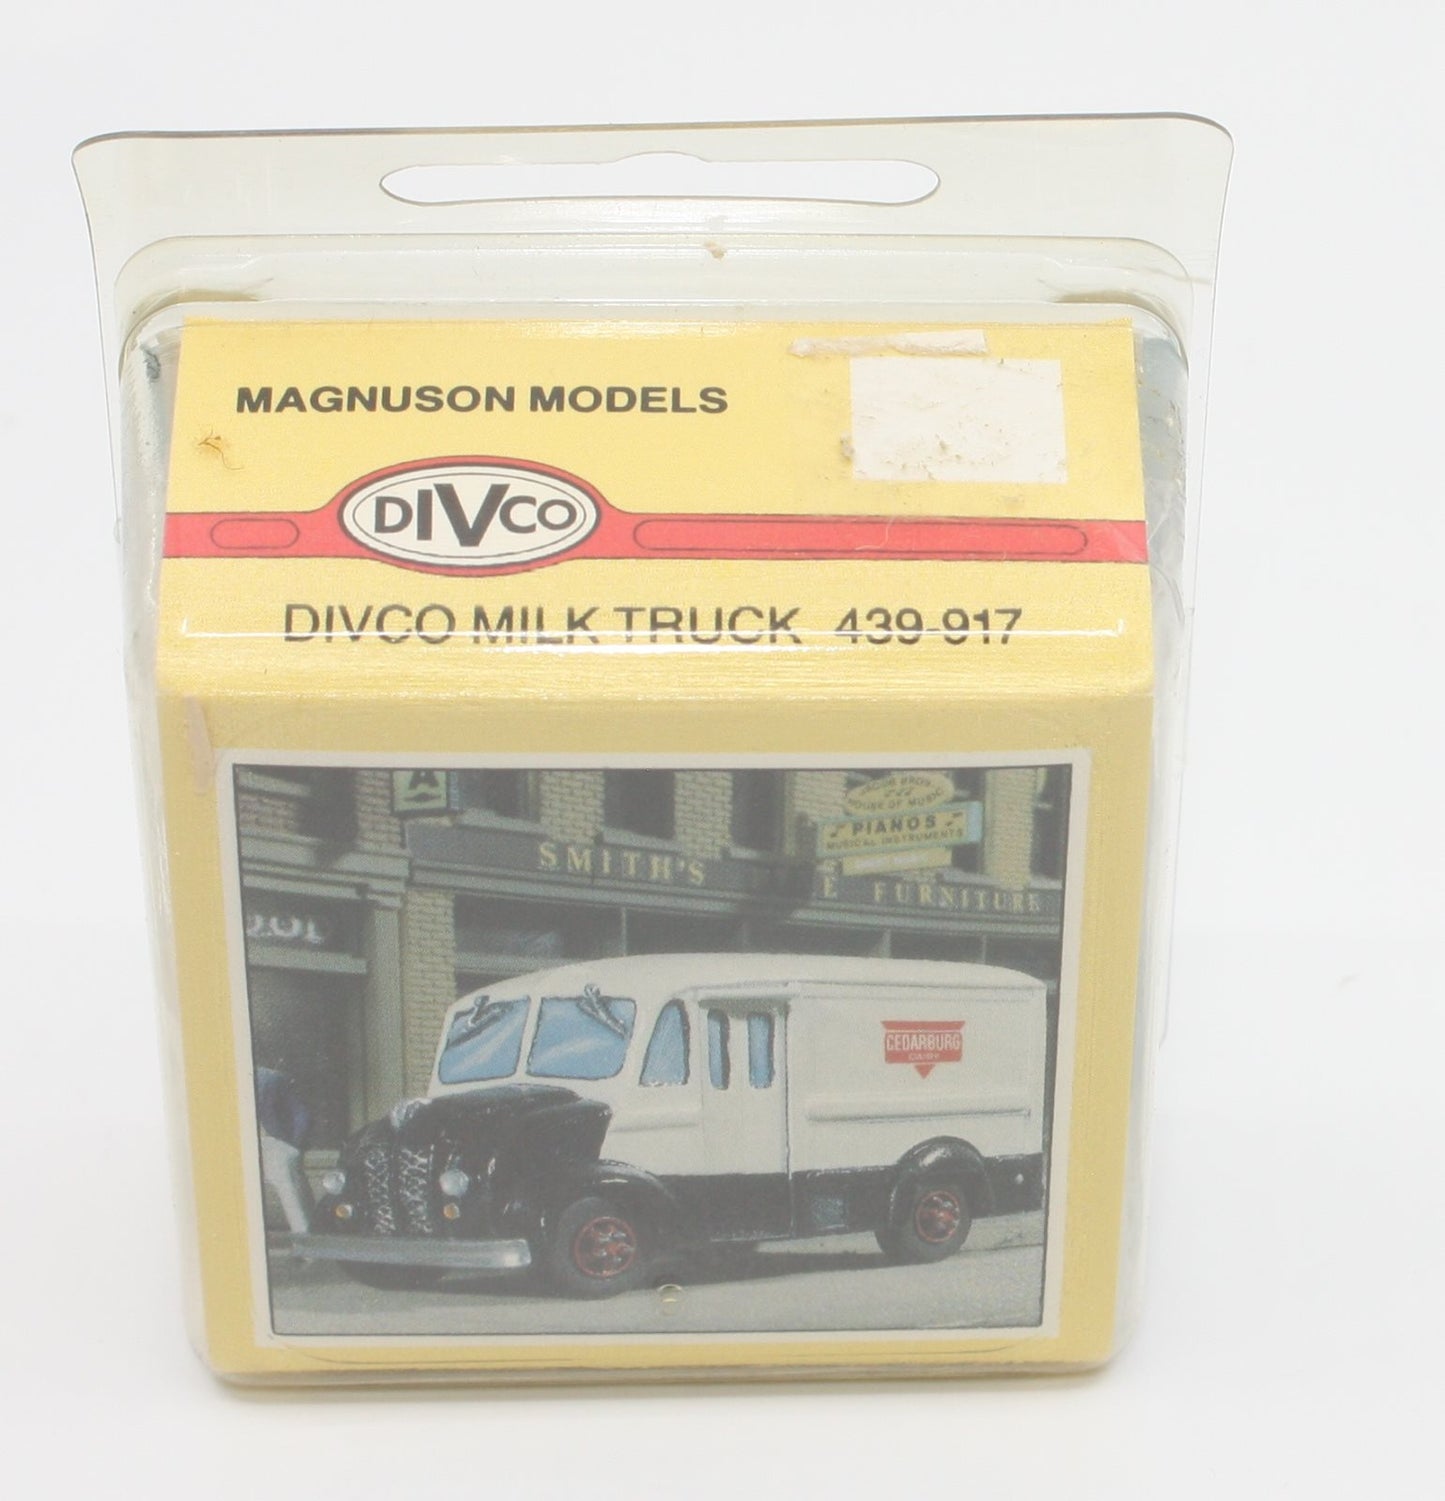 Magnuson Models 439-917 HO Divco Milk Truck Kit